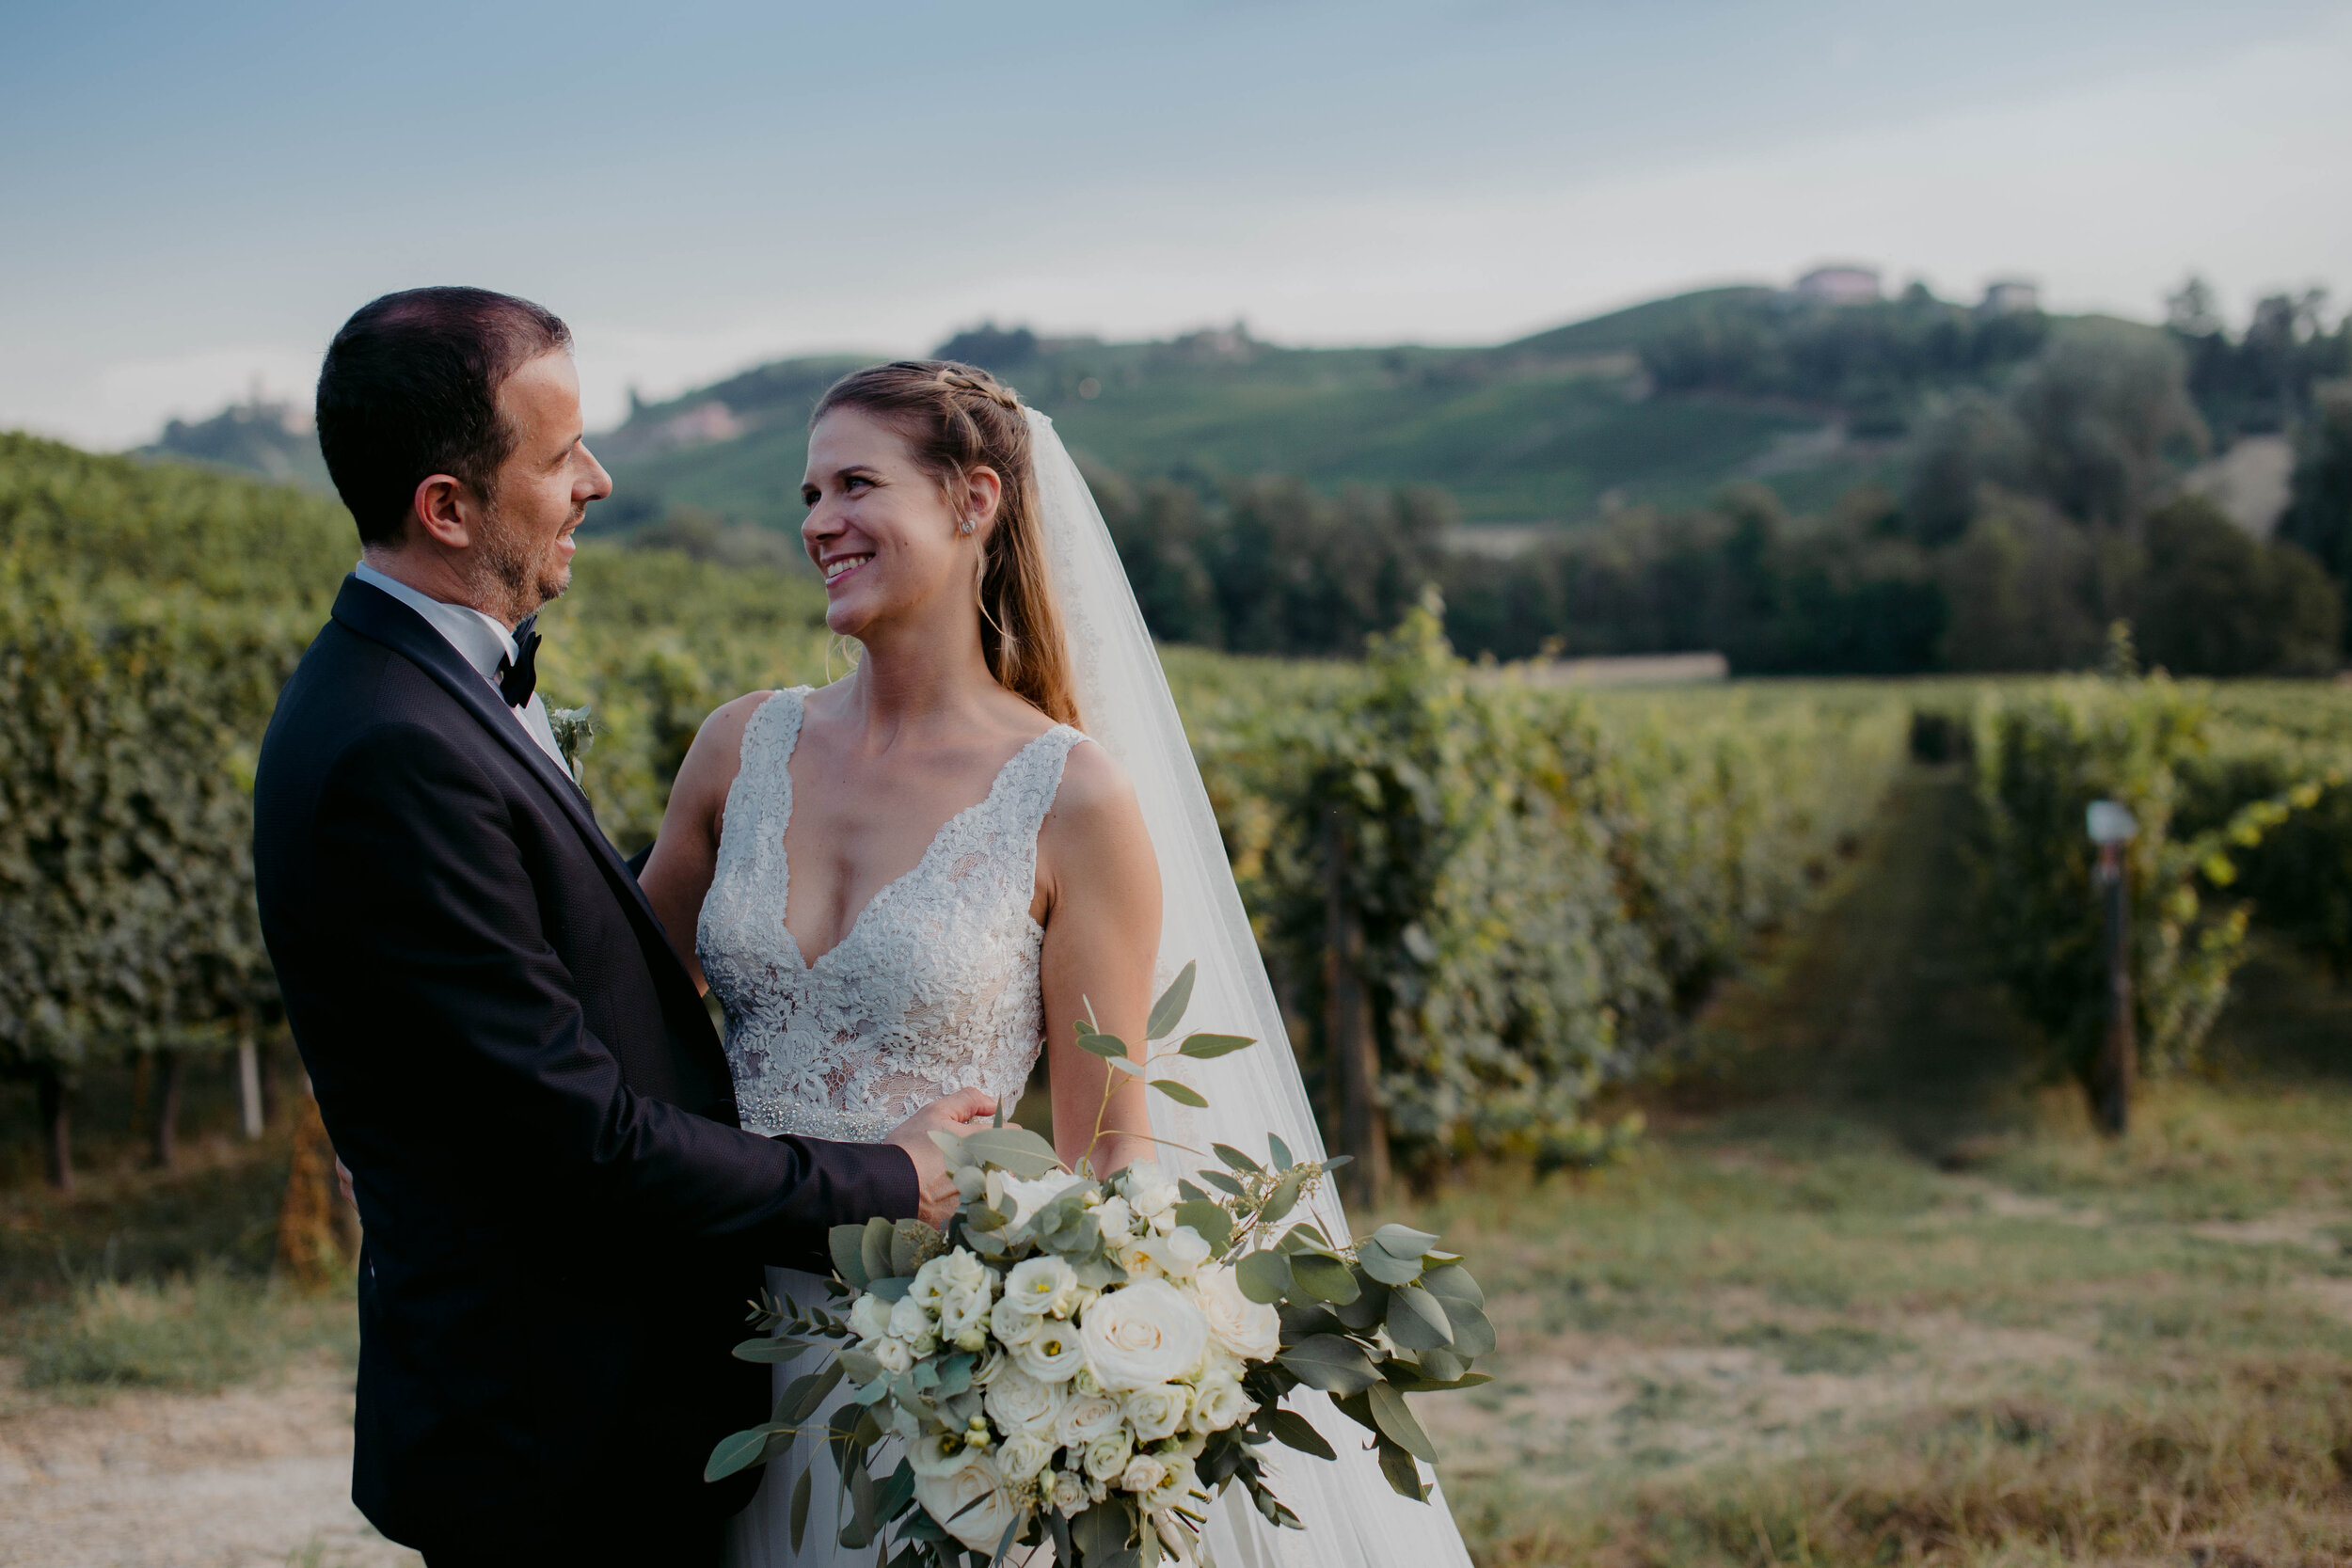 045 - matrimonio a Fontanafredda - Miriam Callegari Fotografa.JPG